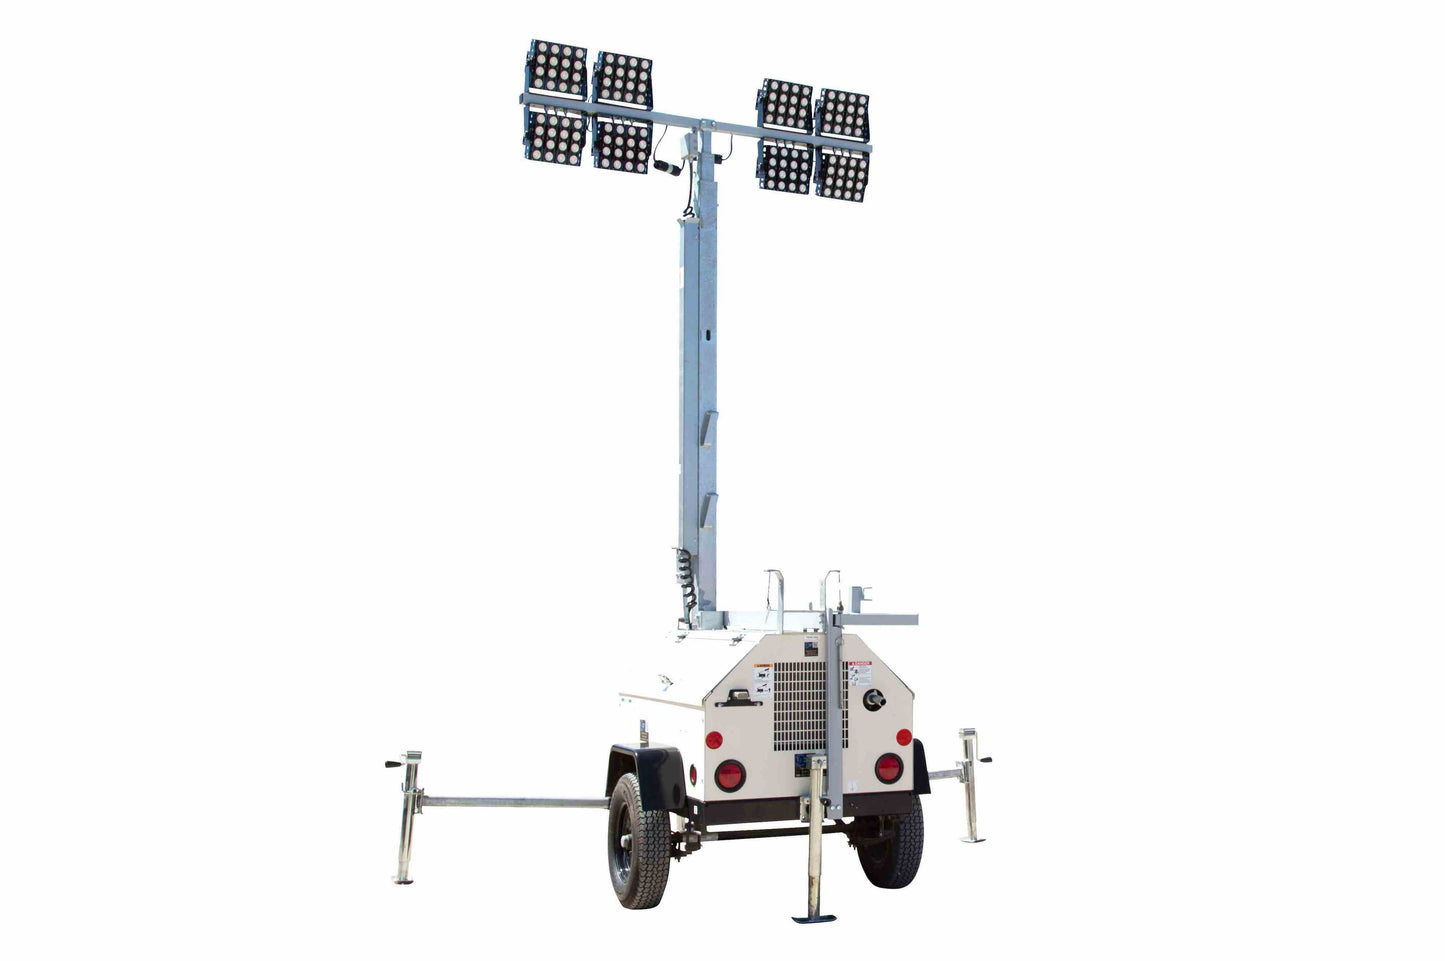 Larson Electronics 30' Mobile Telescoping Light Tower w/ 20kW Diesel Generator - (10) LED Lamps - 100 Gal Fuel Tank